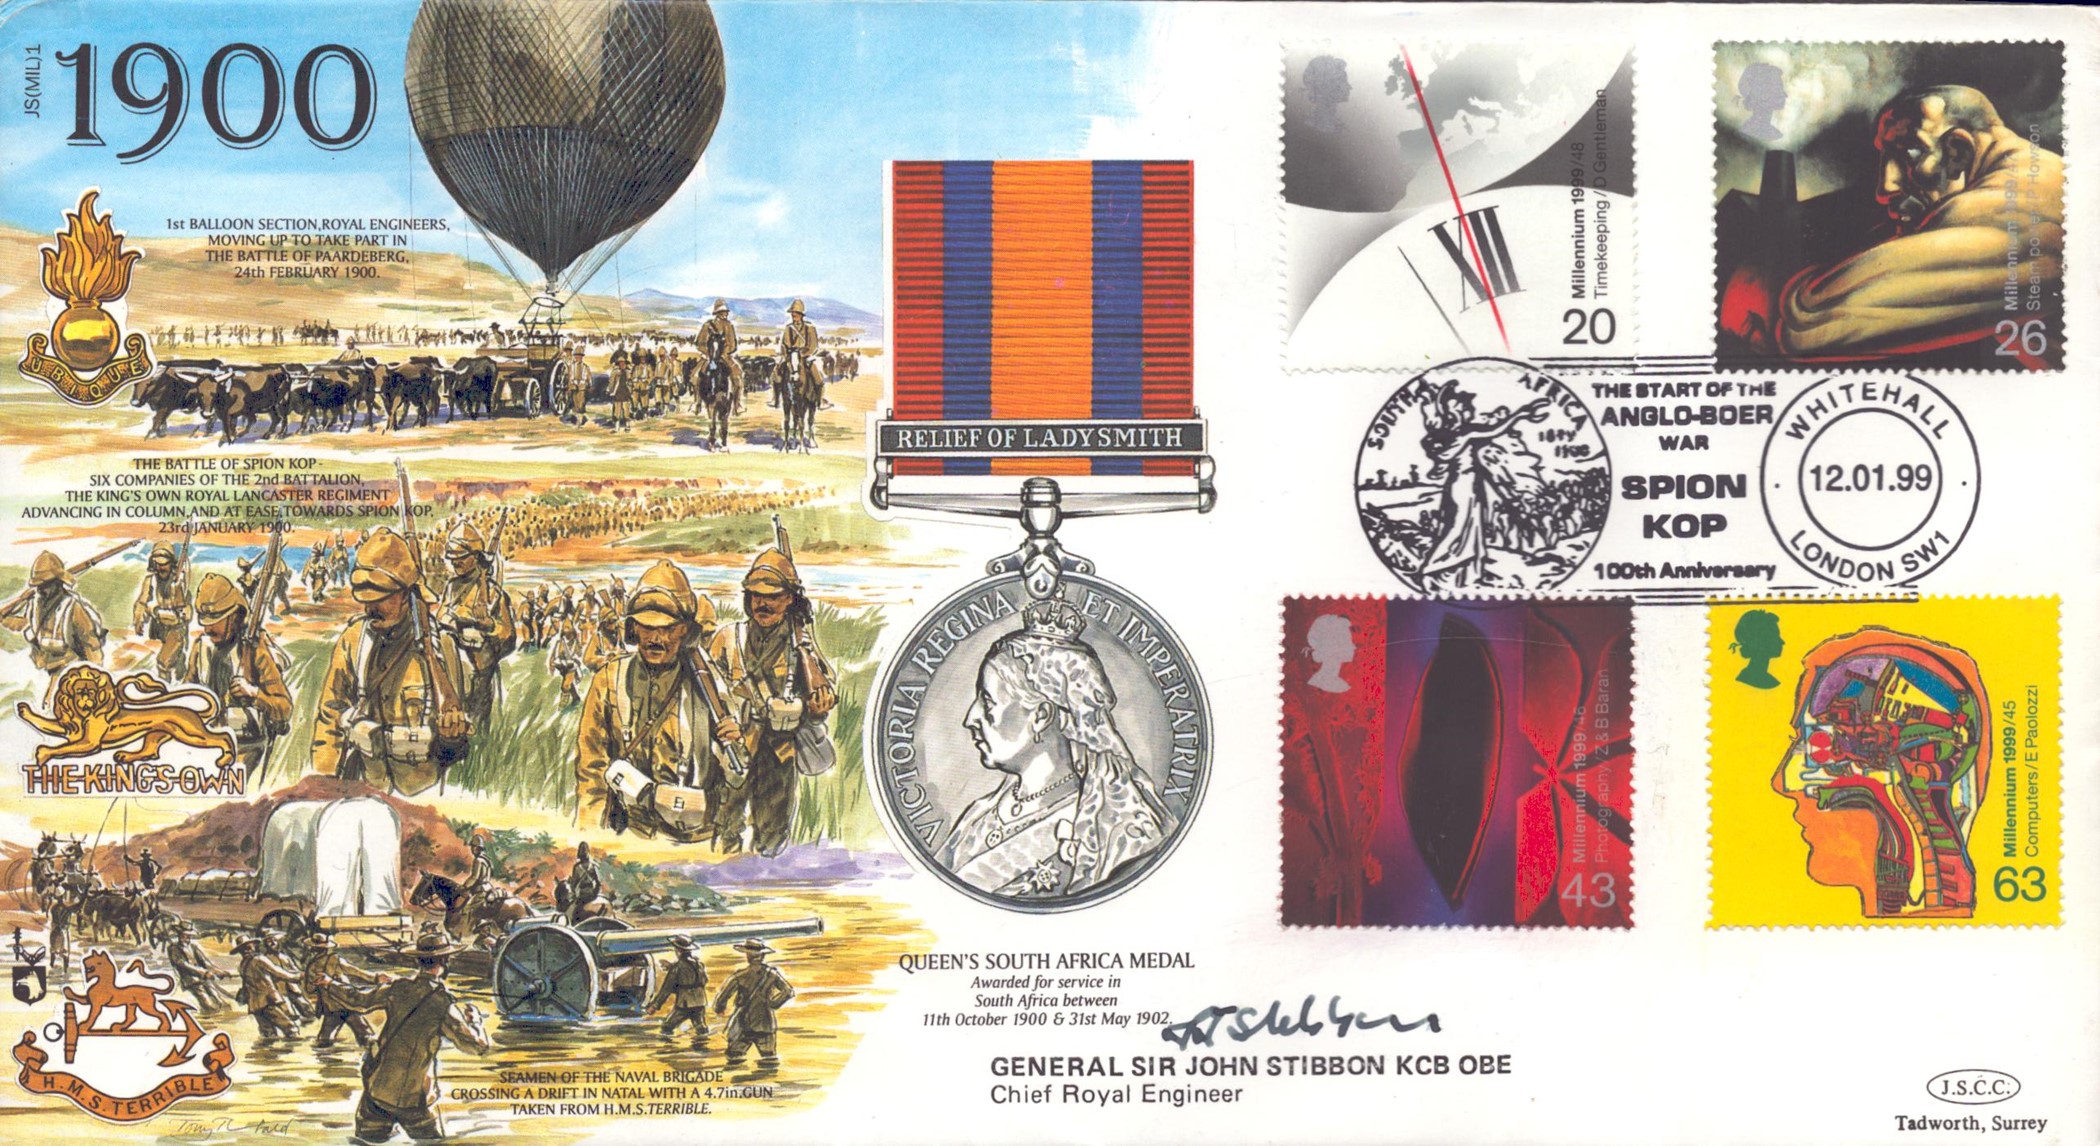 General Sir John Stibbon KCB OBE signed Great War 1900 commemorative flown FDC (JS(MIL)1) PM The